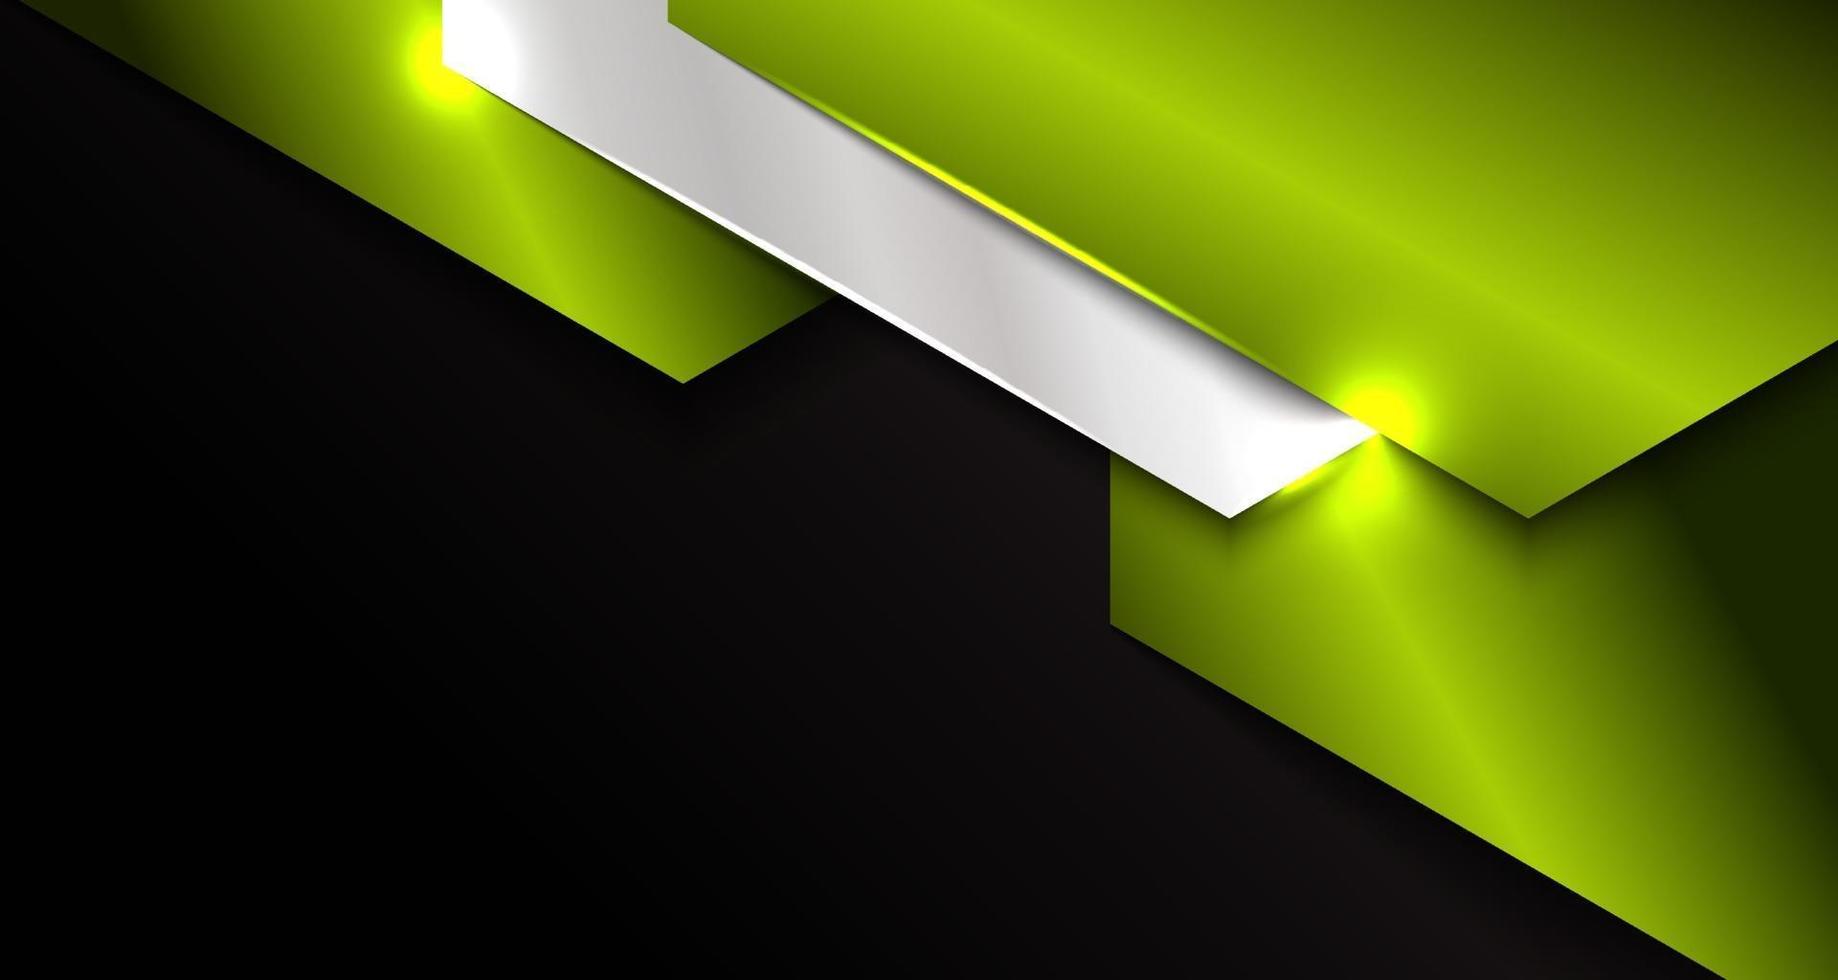 banner web template abstrato verde e prata metálico metálico camada sobreposta geométrica em fundo preto vetor